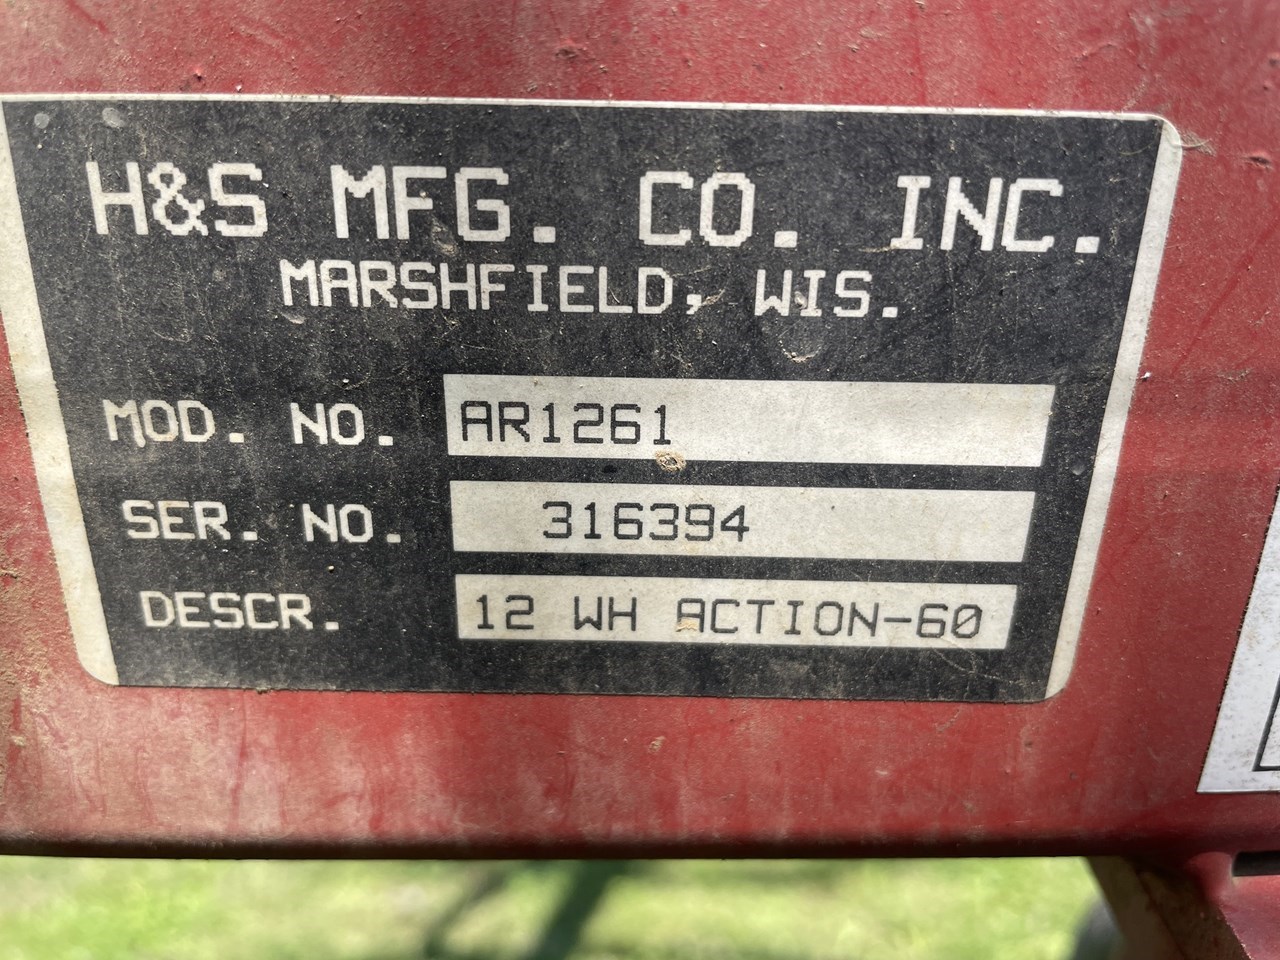 H & S AR1261 Hay Rake For Sale